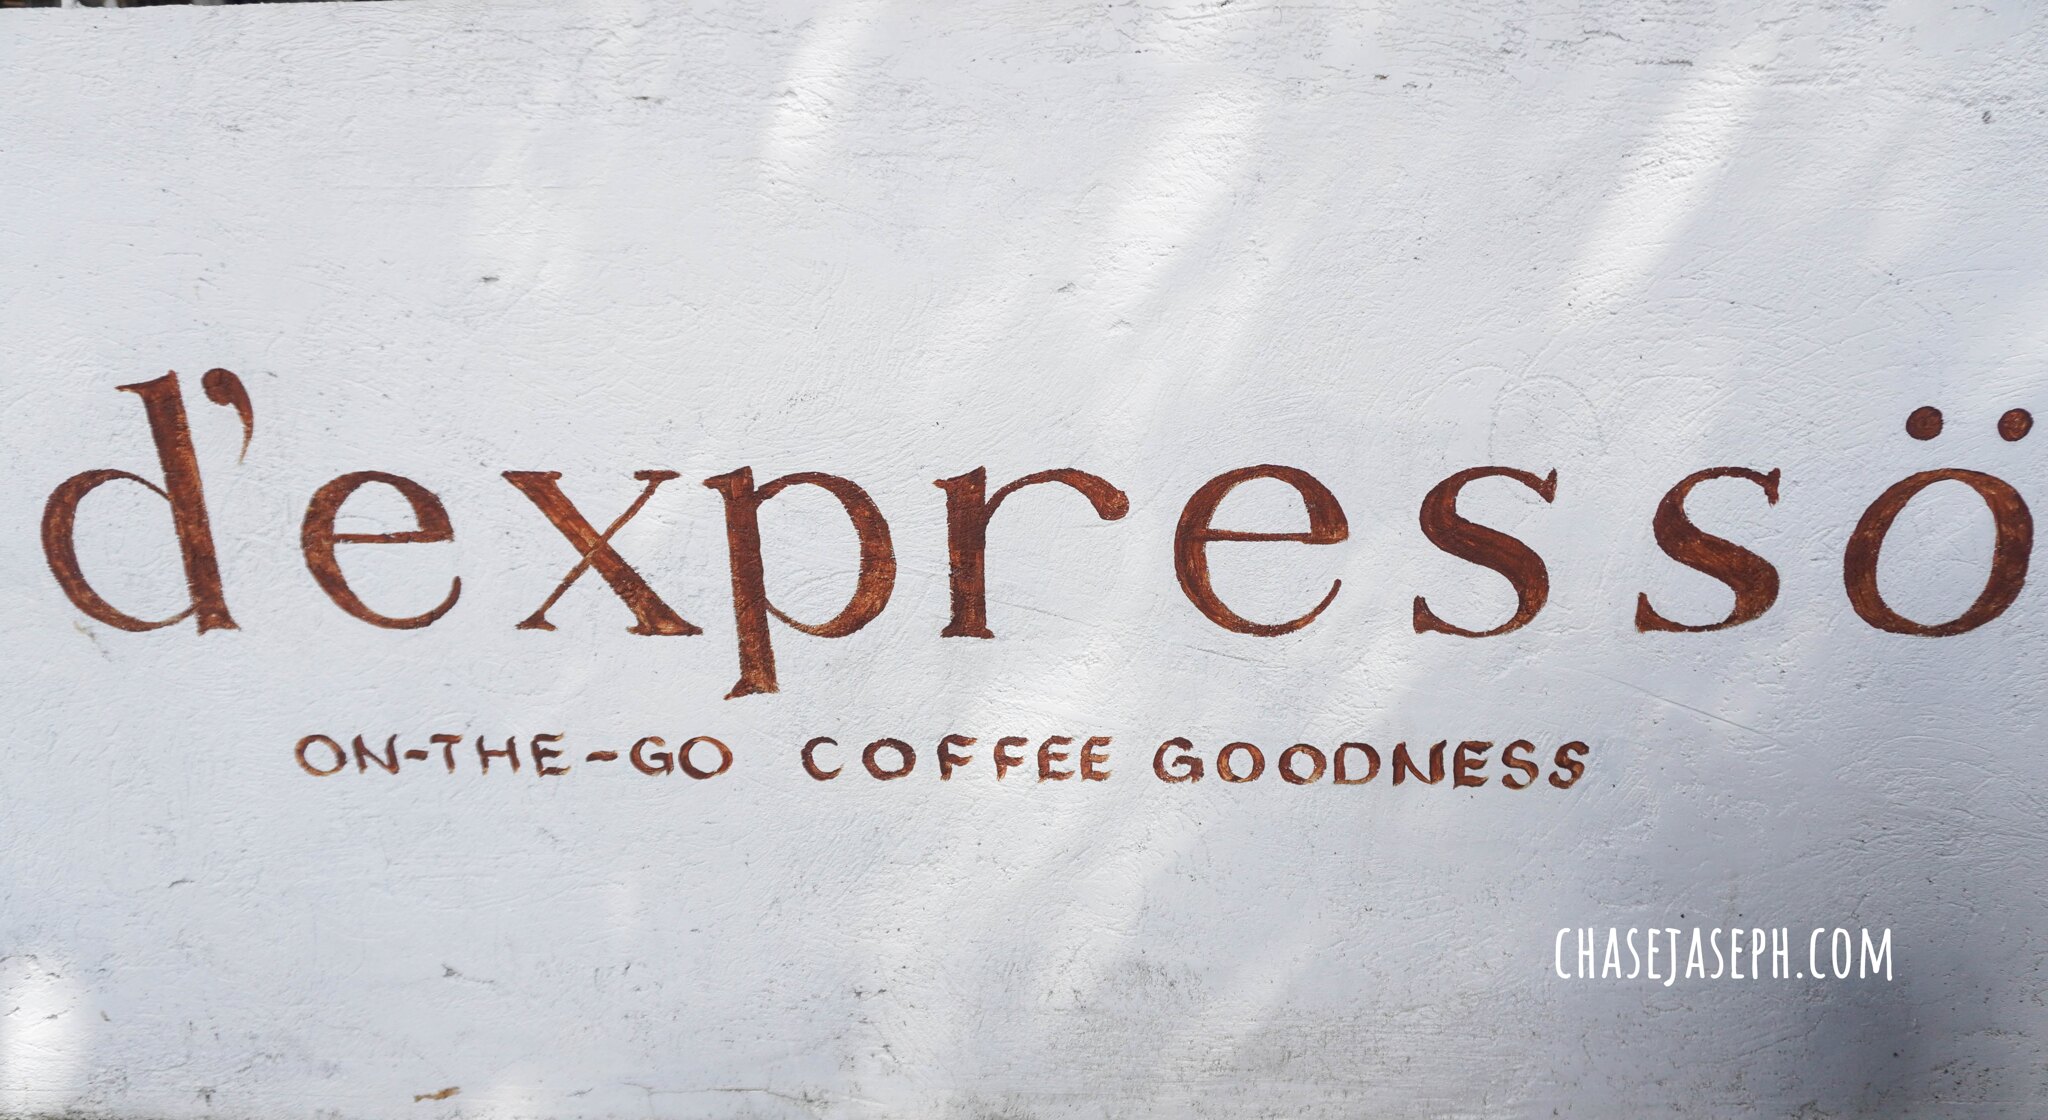 D' Expresso Coffee Shop - Quirino 2-A, Quezon City (Food Guide)